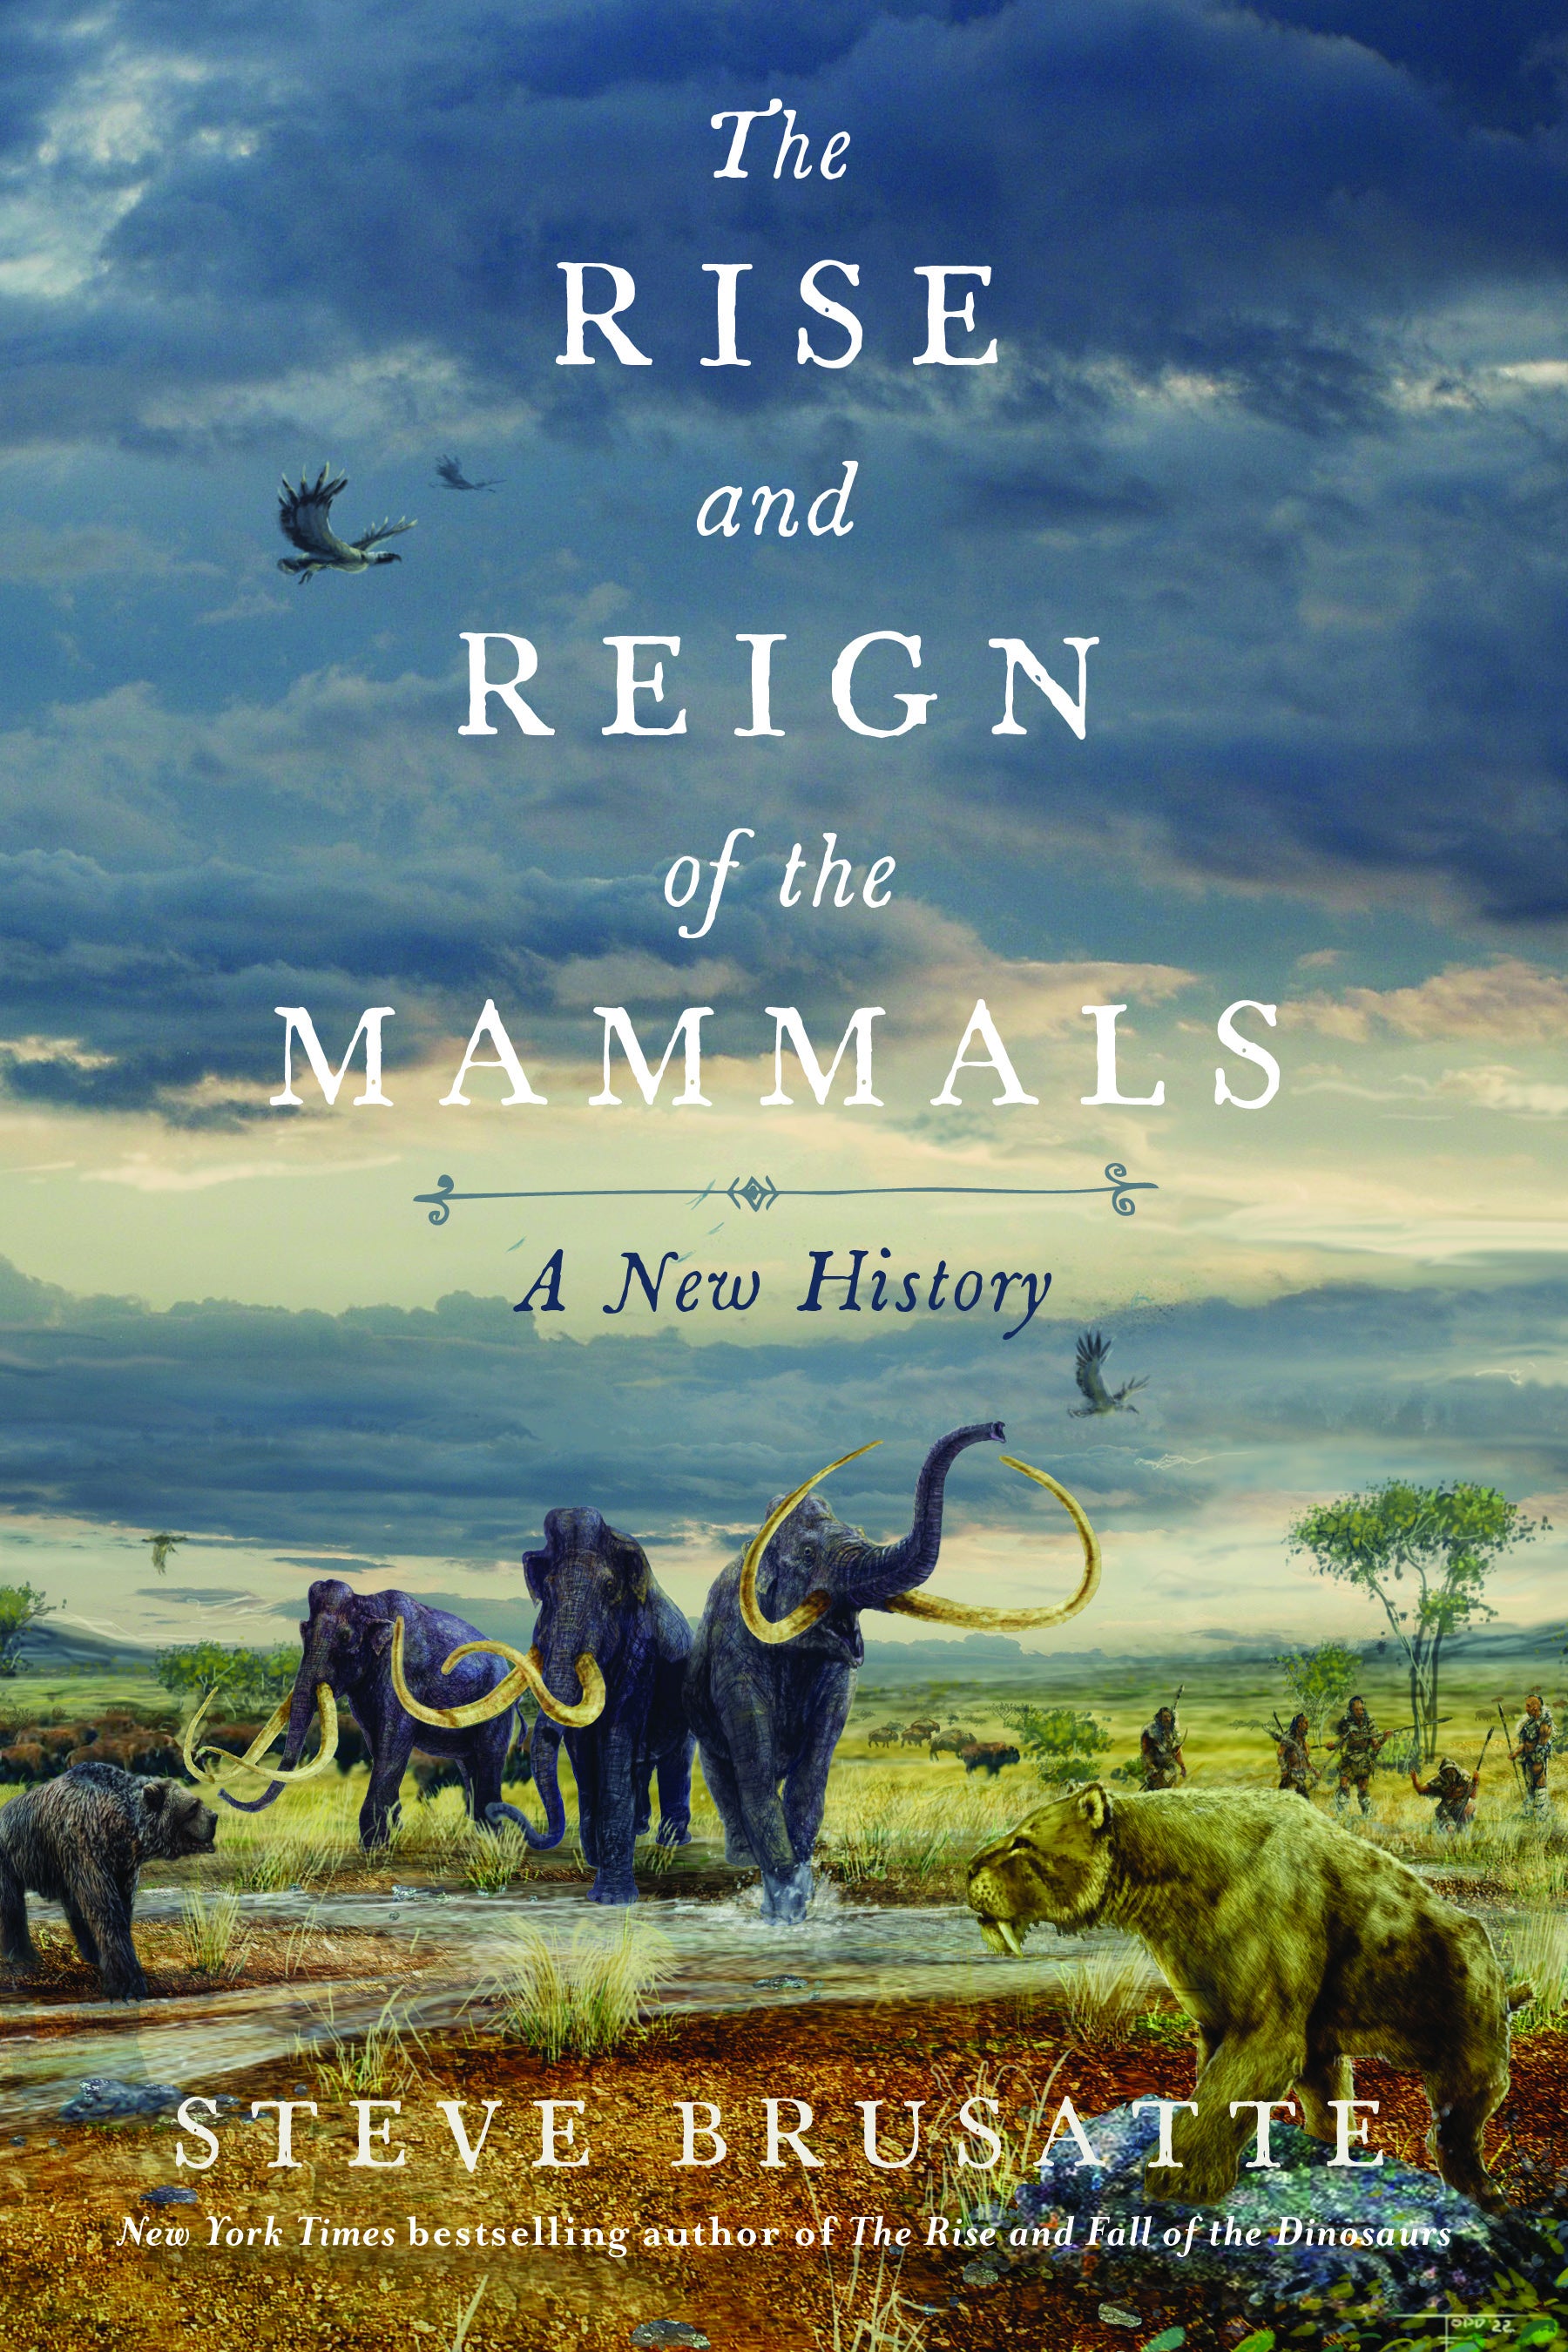 Brusatte's book walks readers through the evolution of mammals. (Illustration: Harper Collins)